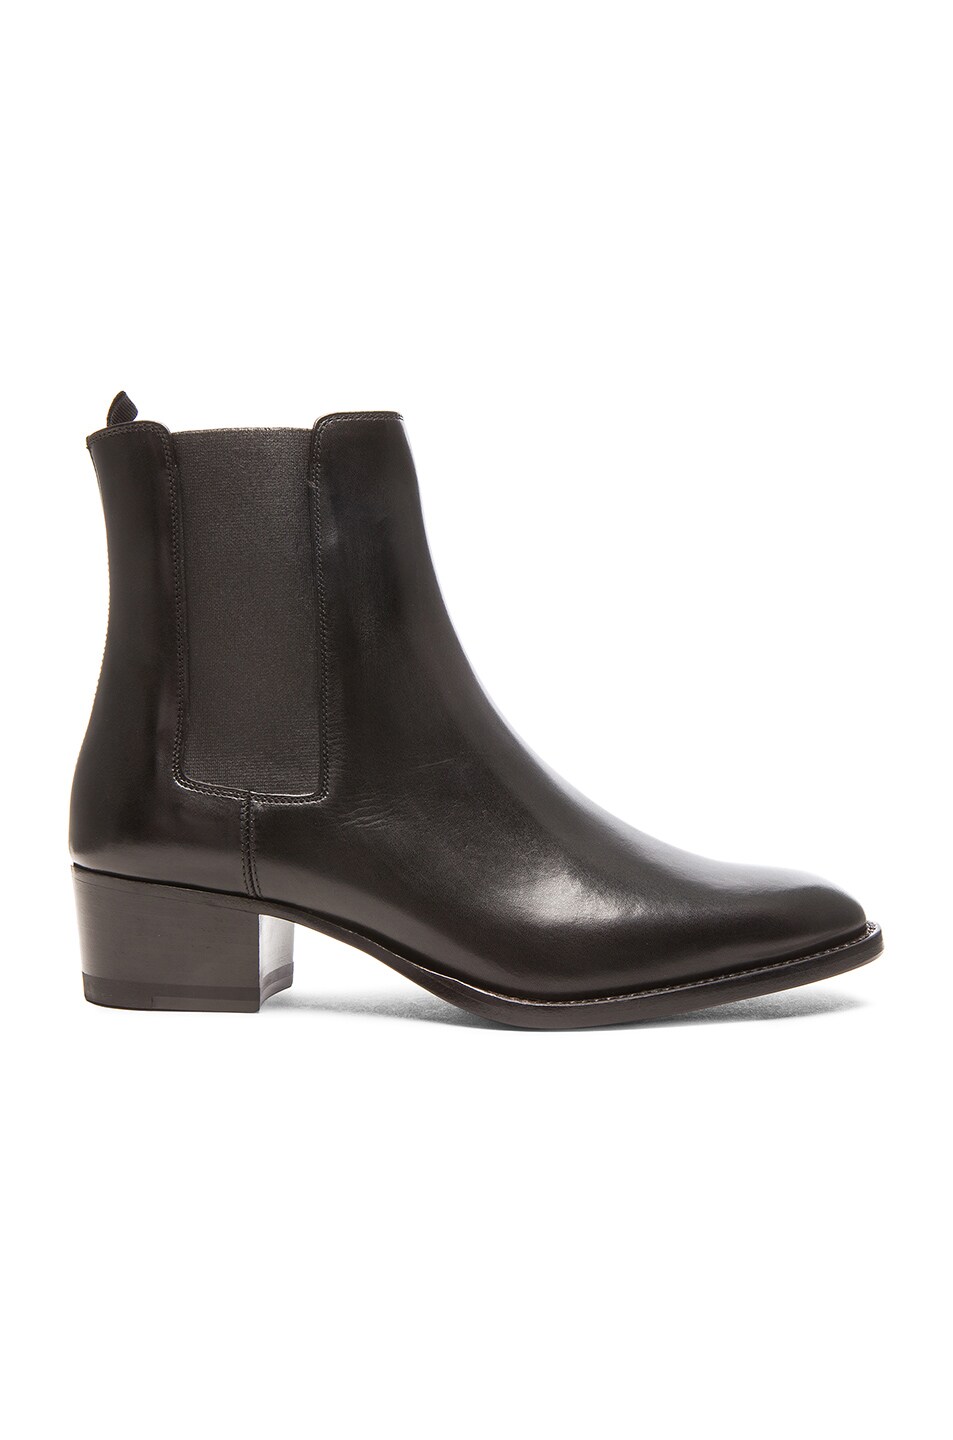 Image 1 of Saint Laurent Wyatt Chelsea Leather Boots in Black